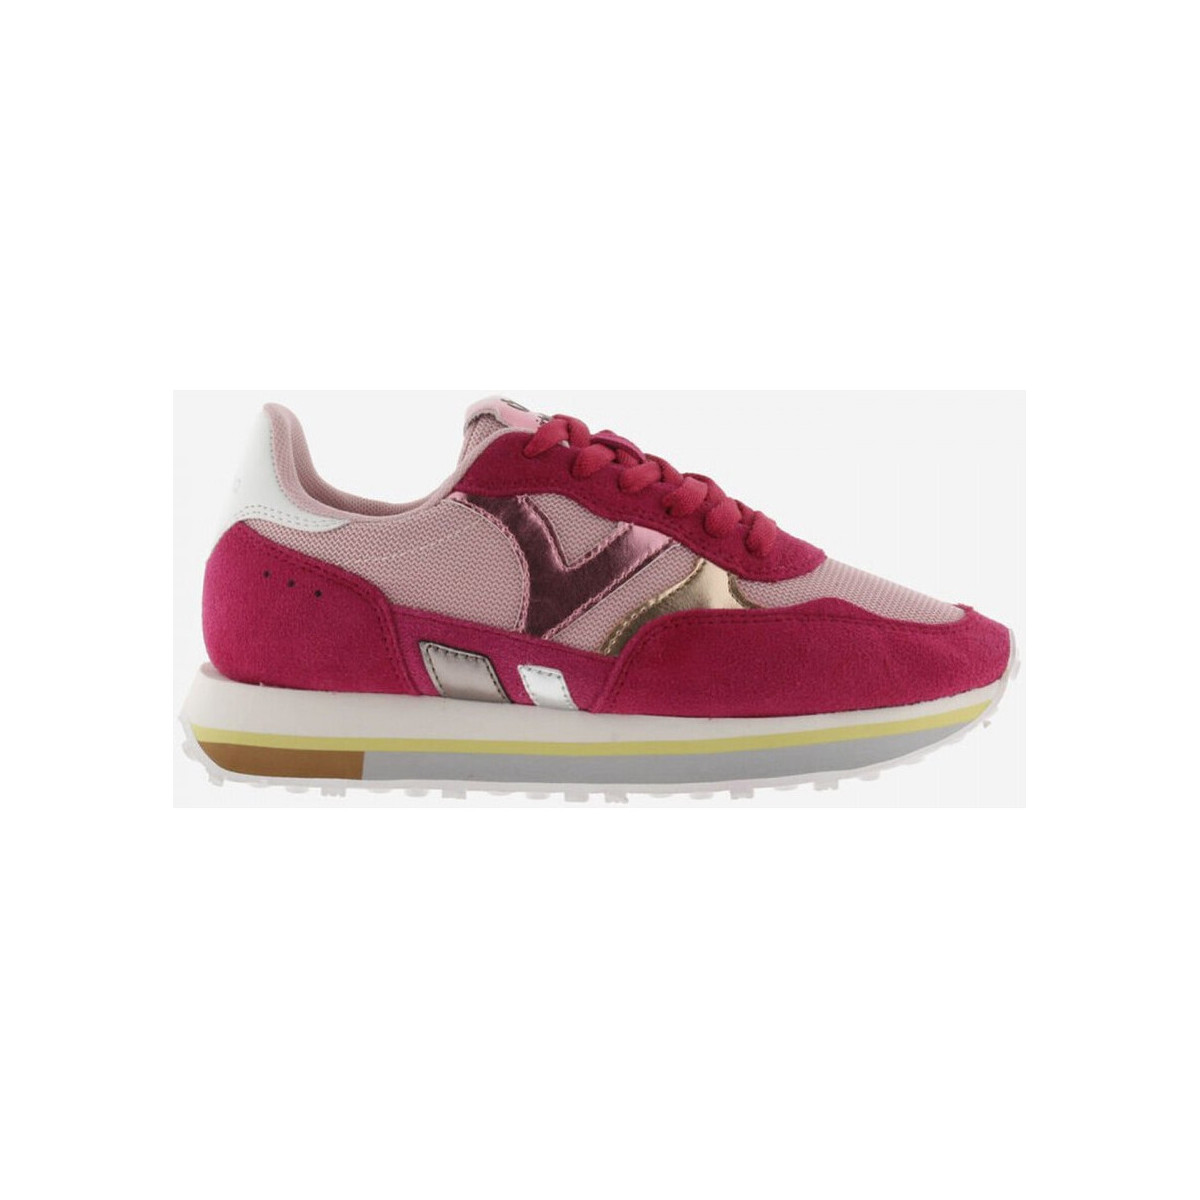 Schuhe Damen Laufschuhe Victoria Nova rejilla color Rosa